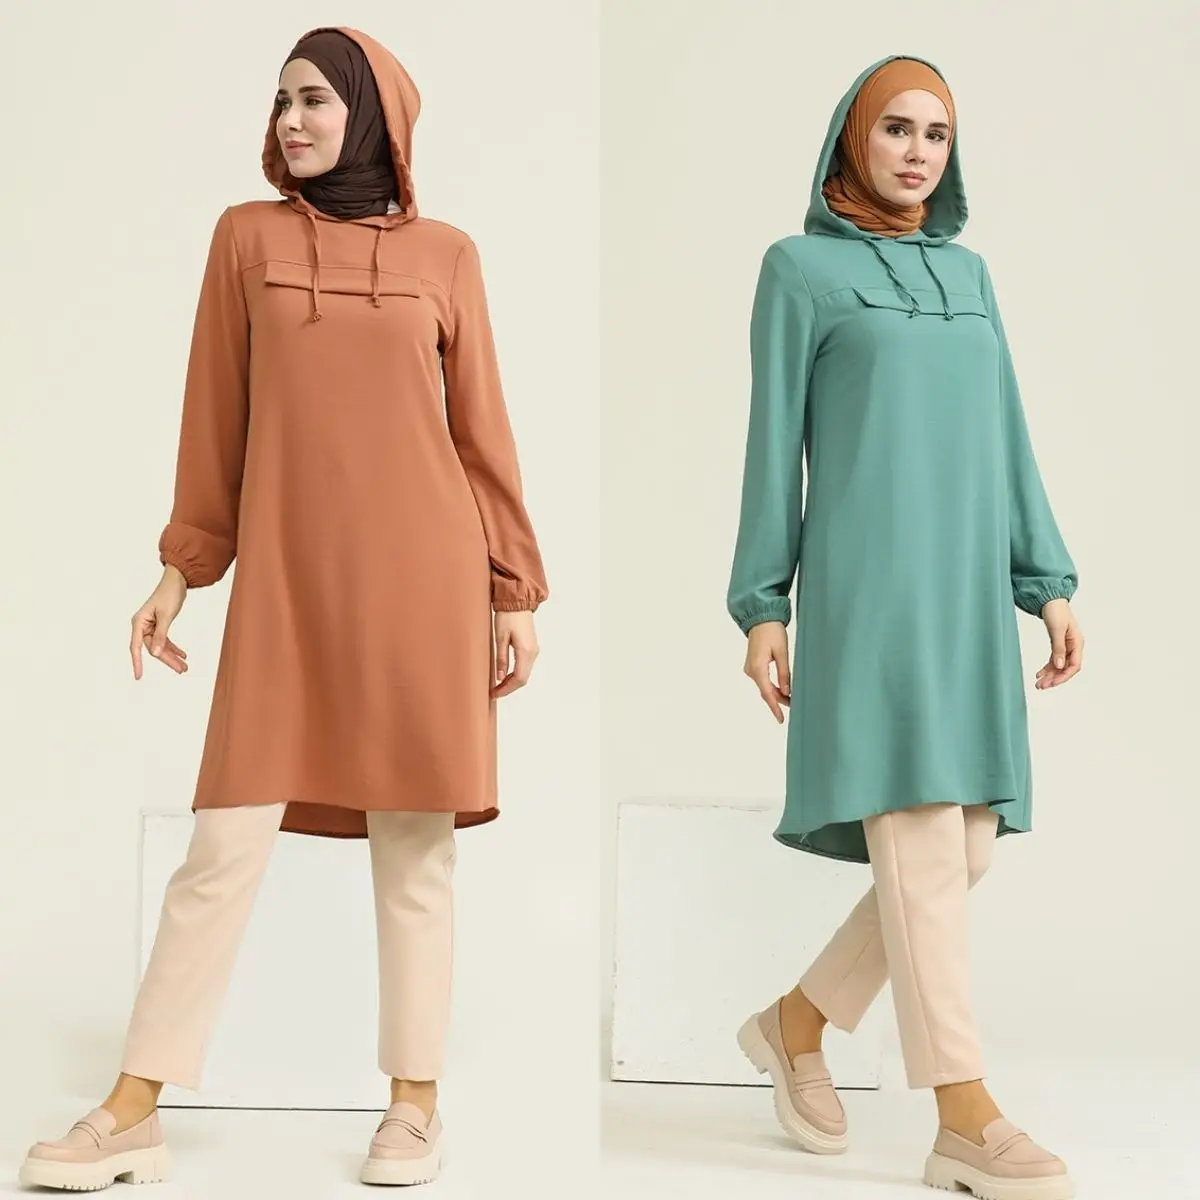 Hooded Tunic Long Elastic Sleeve Plain Seasonal Winter Women Muslim Fashion Hijab Clothing Turkey Istanbul Islamic Dubai Casual